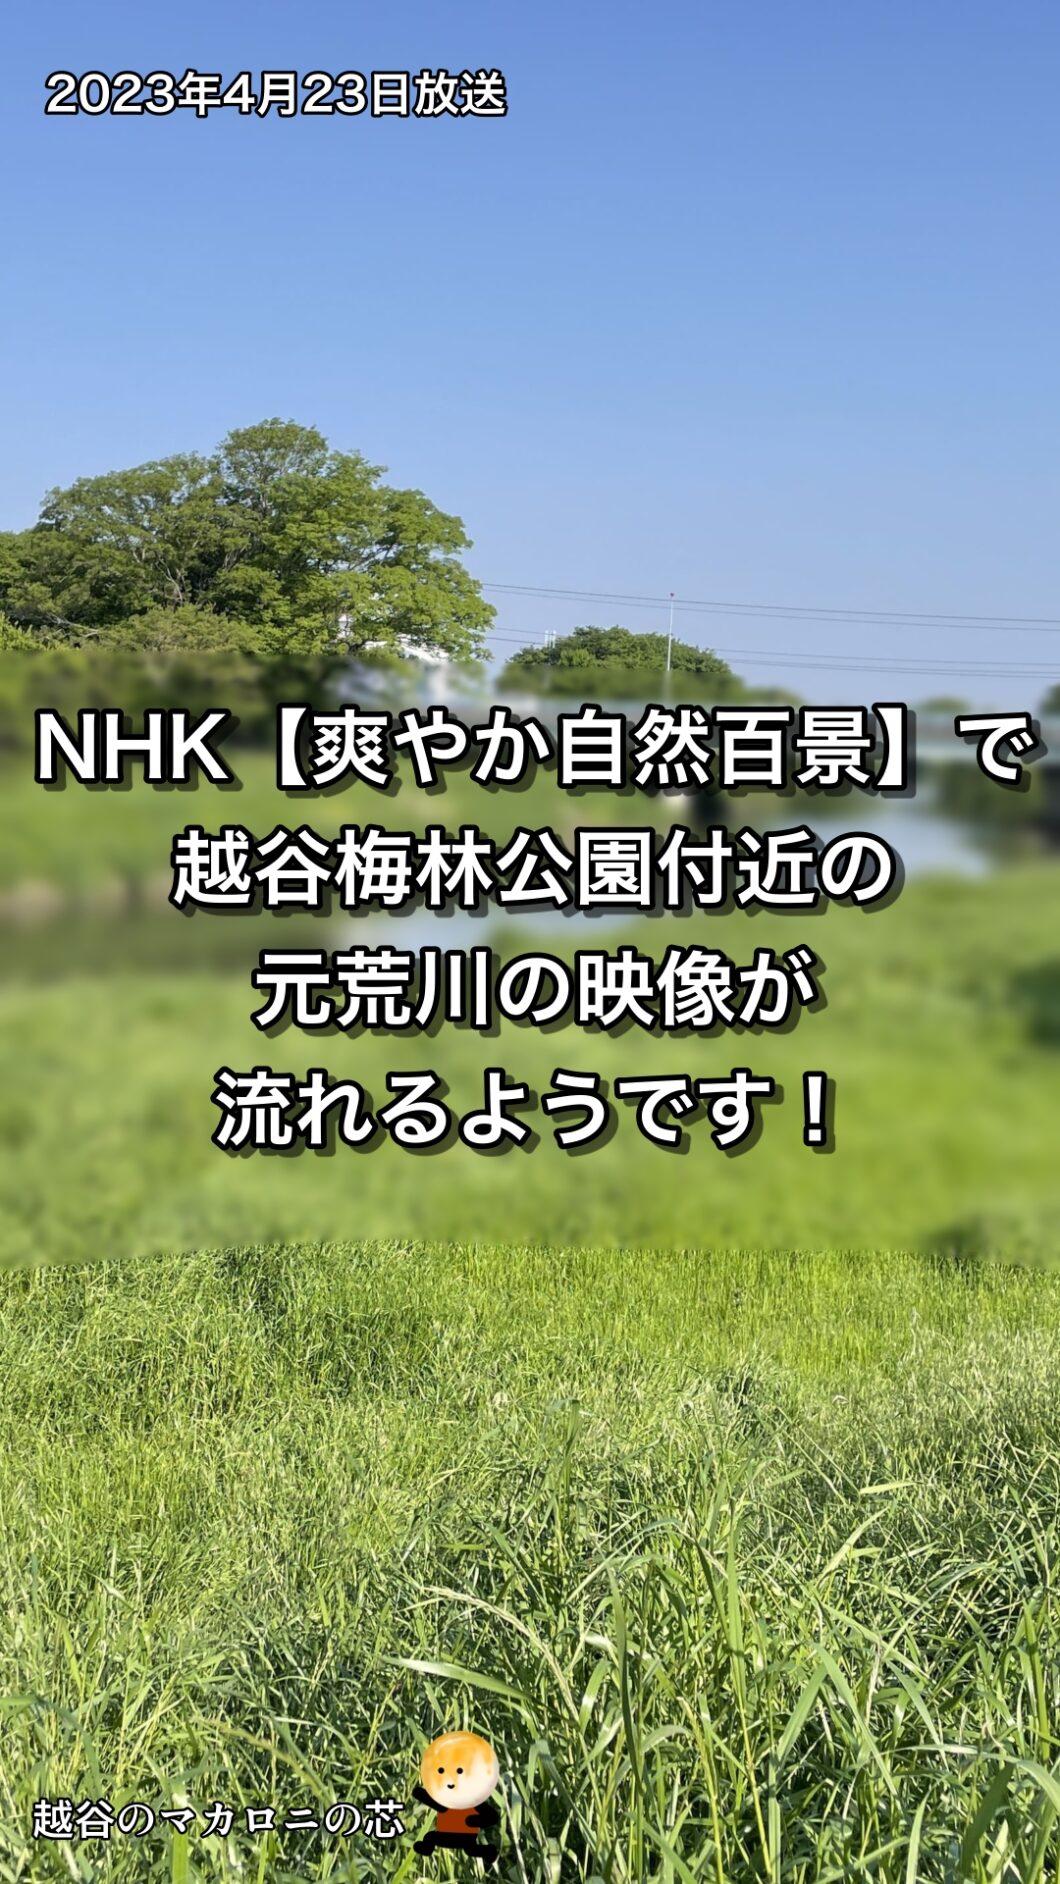 NHK【爽やか自然百景】で越谷梅林公園付近の元荒川の映像が流れるようです！